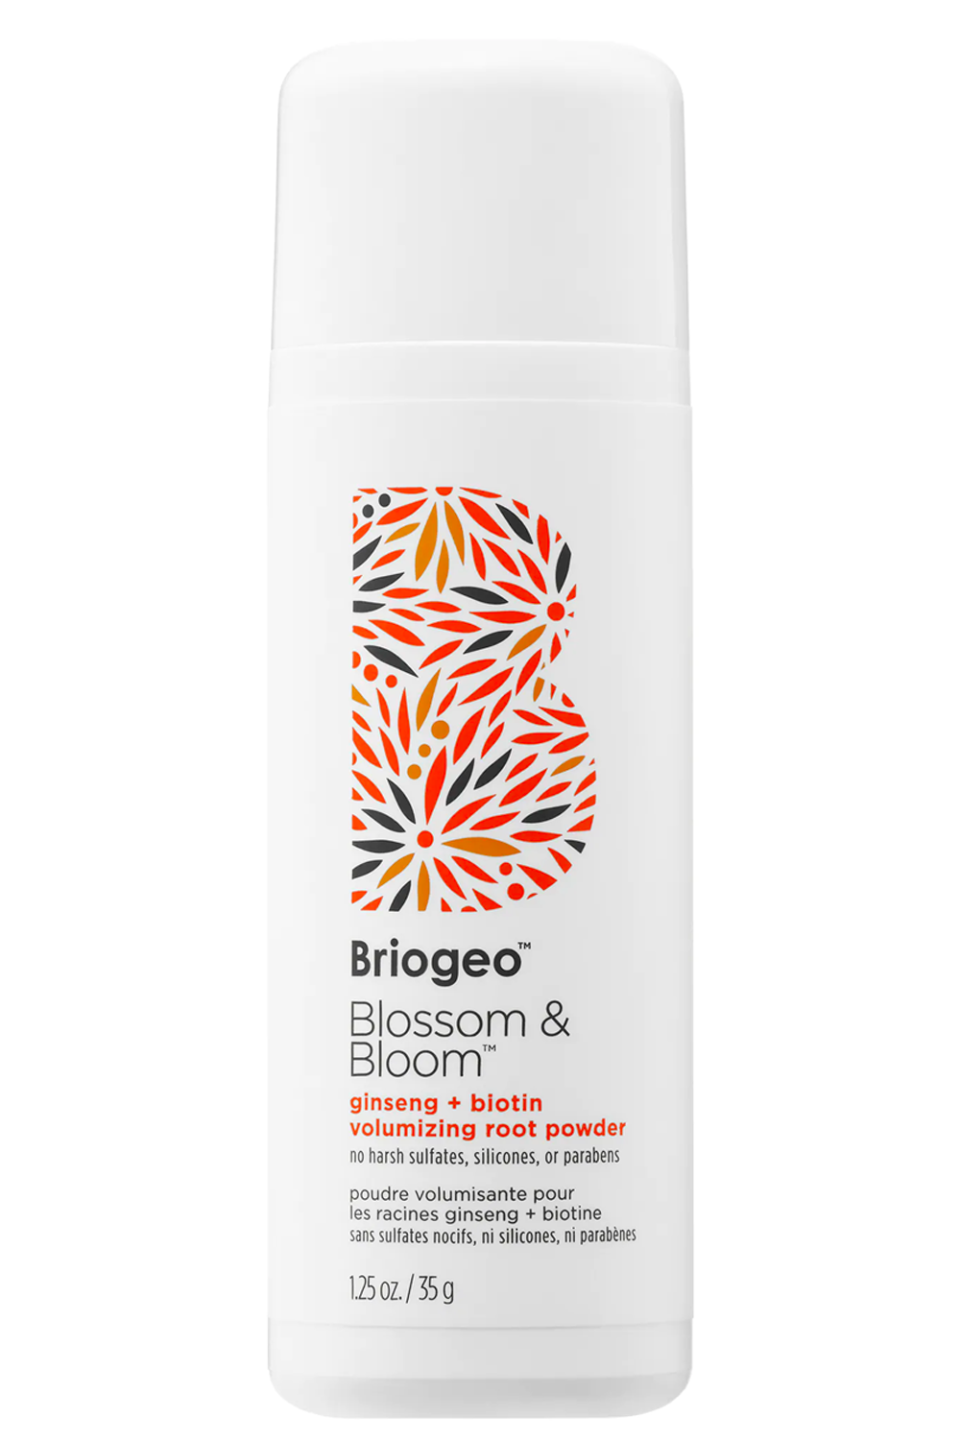 9) Briogeo Blossom & Bloom Volumizing Root Powder & Dry Shampoo